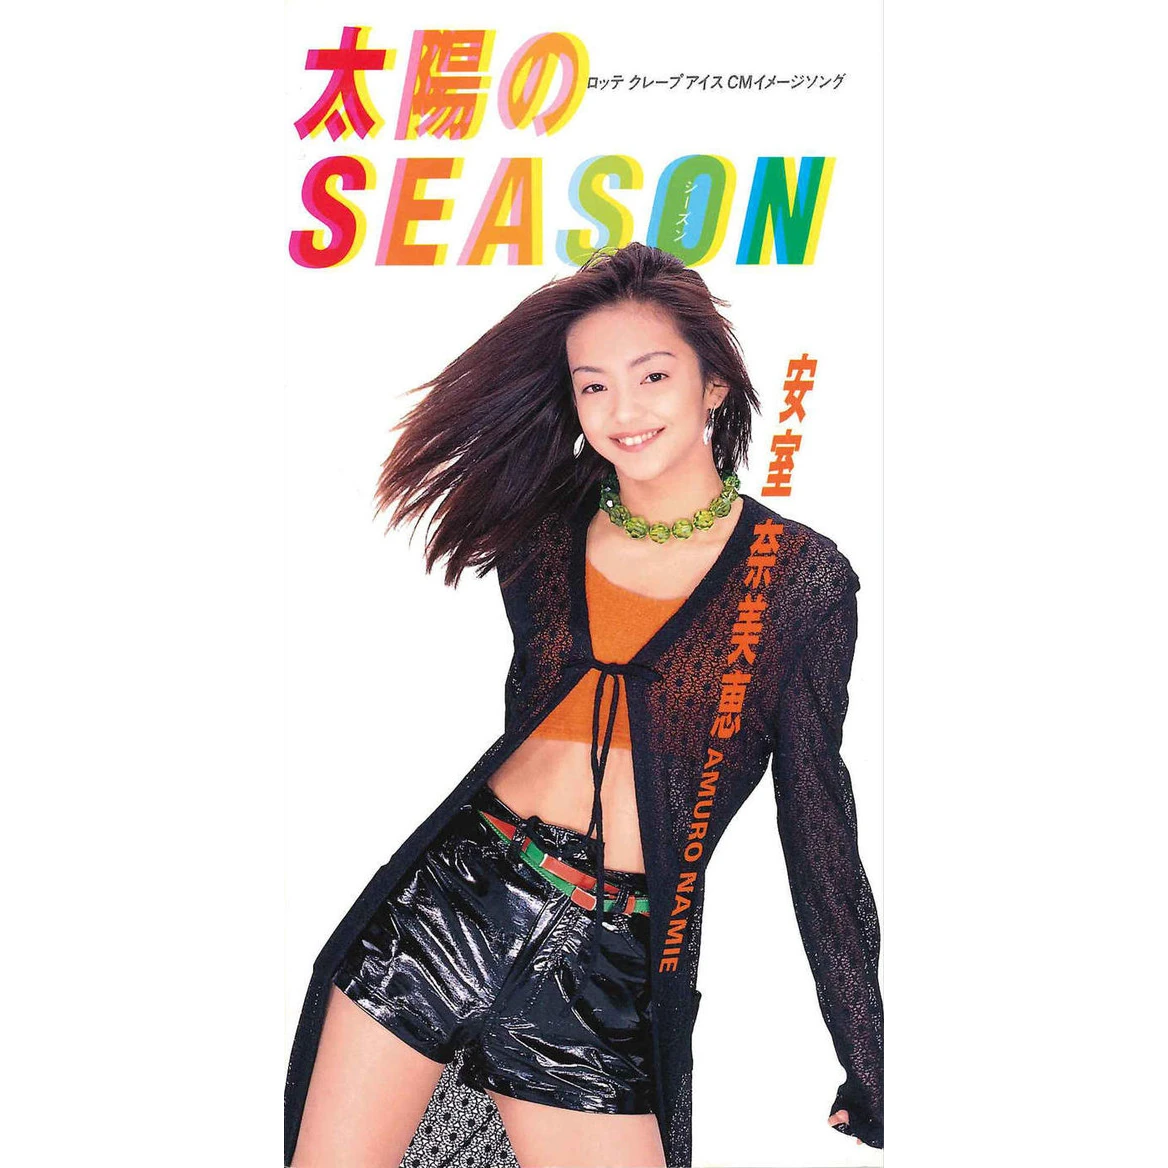 Namie Amuro — Taiyou no SEASON cover artwork